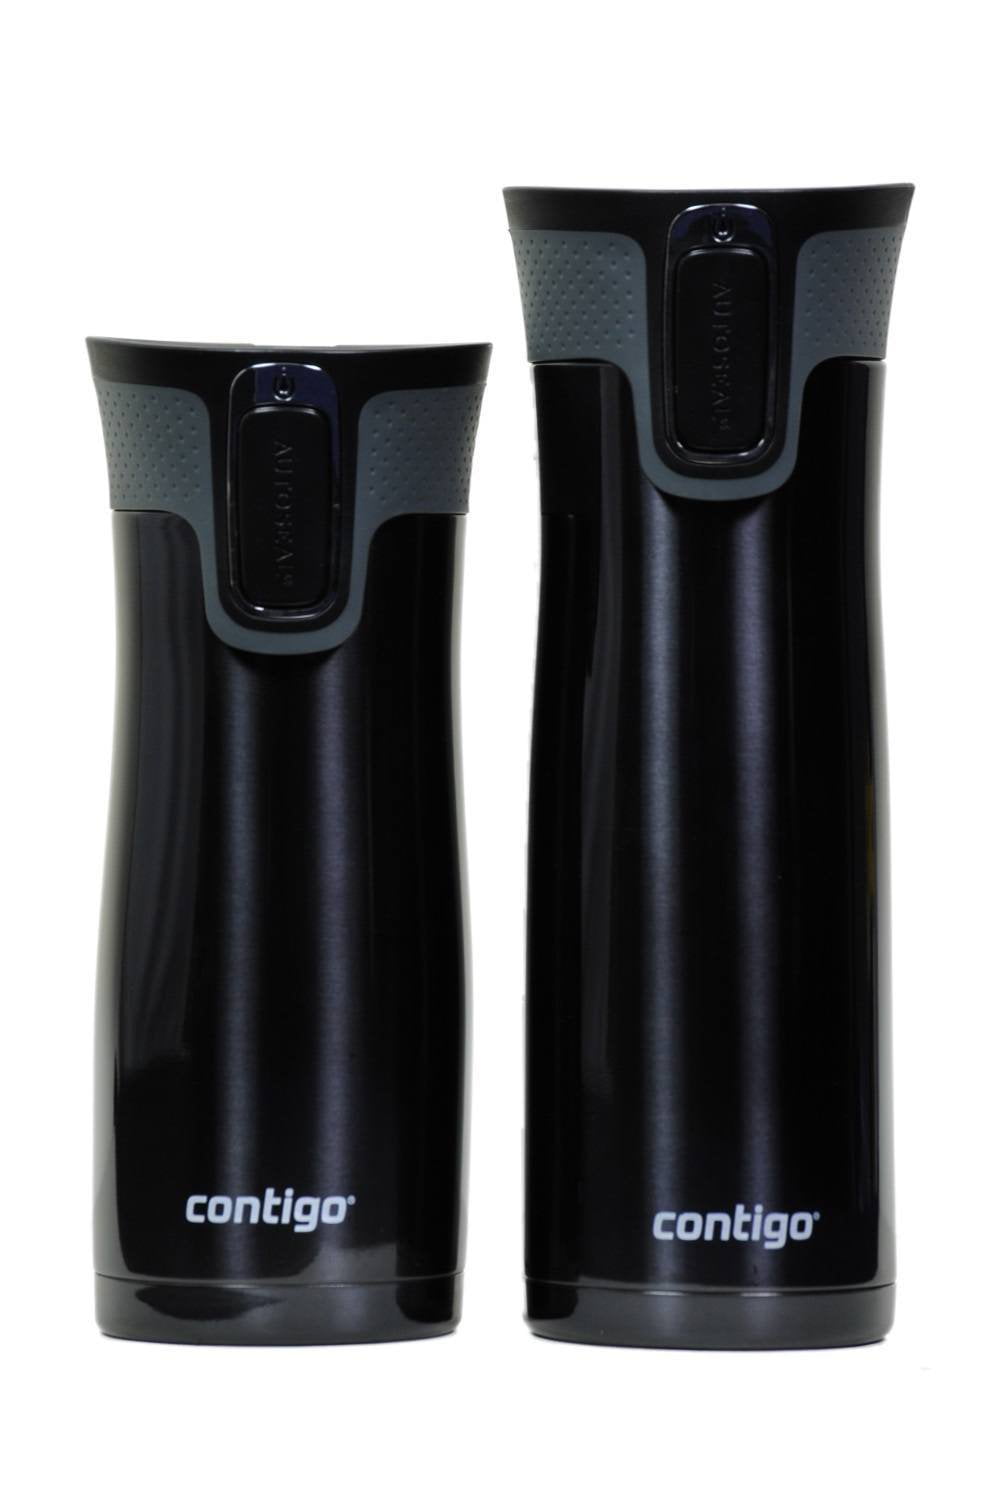 Contigo® West Loop 2.0 Travel Tumbler 16-Oz. - Personalization Available